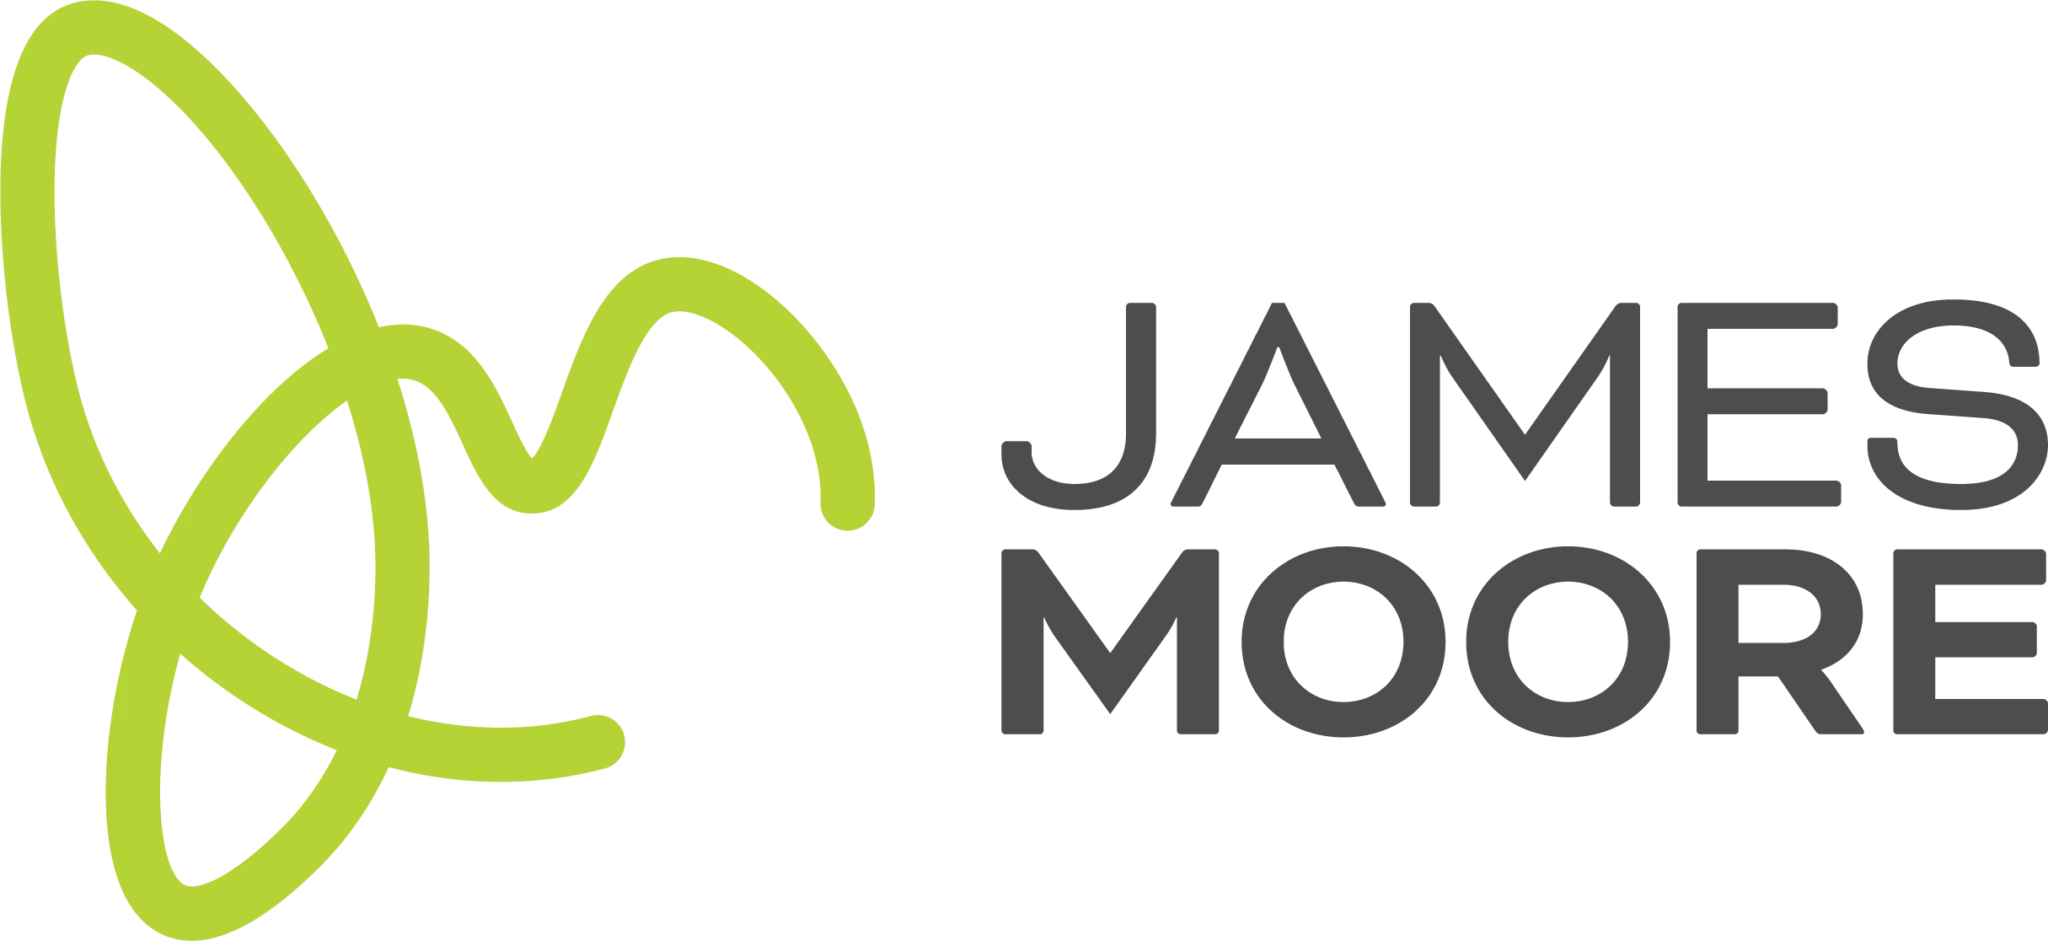 james moore logo horizontal stacked format